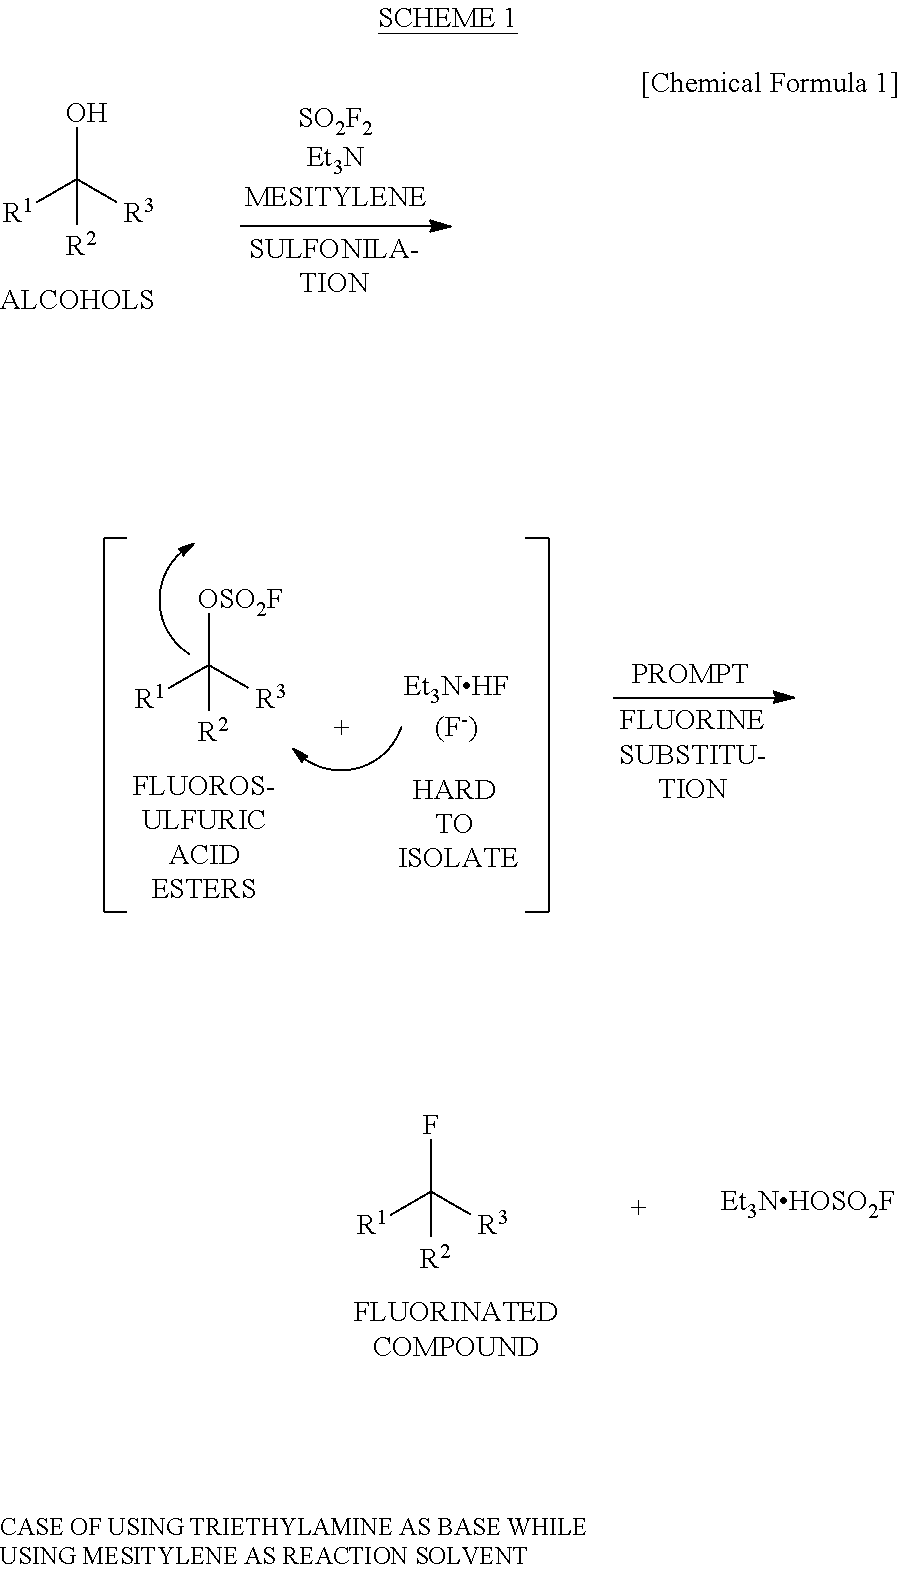 Method for Producing Fluorosulfuric Acid Ester